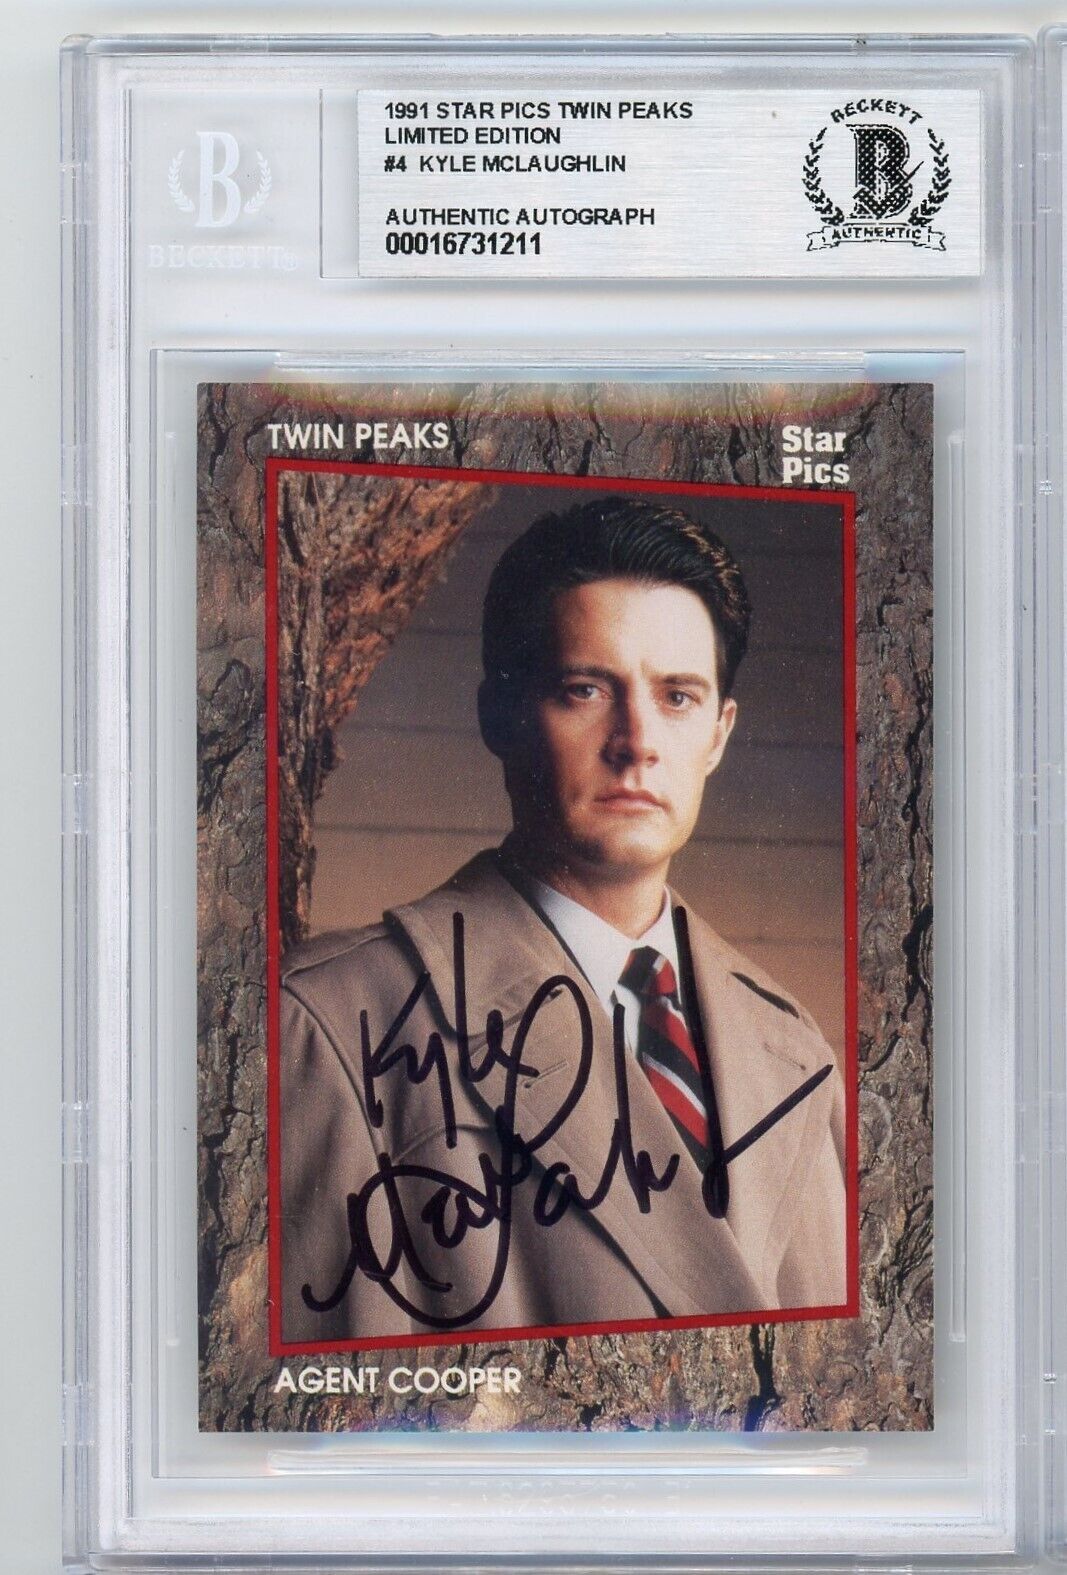 Kyle McLaughlin Agent Cooper 1991 Star Pics Twin Peaks #4 Autograph BAS Beckett